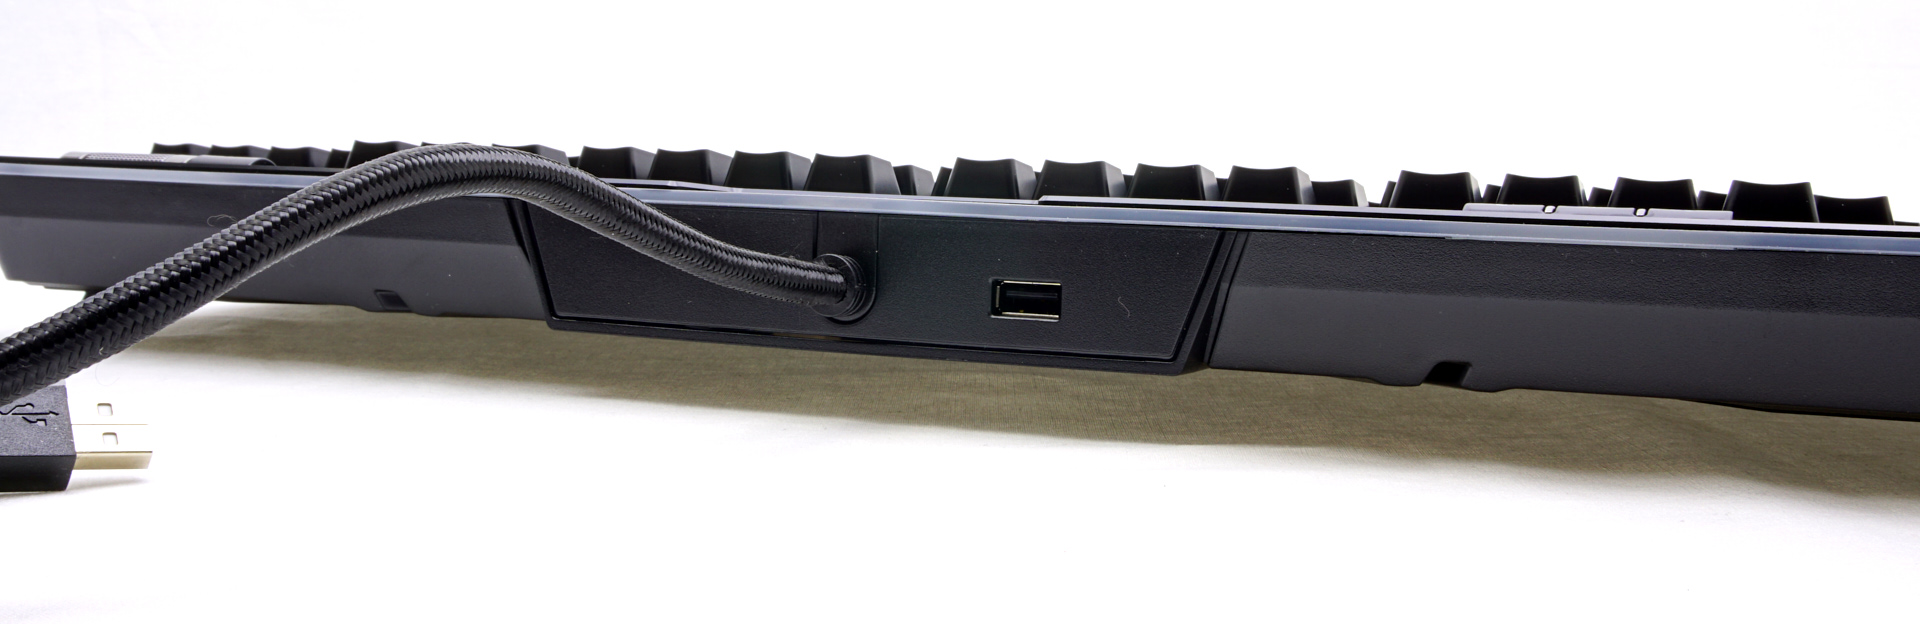 kapitalisme Gør det ikke Ark The Corsair K95 RGB Platinum Mechanical Gaming Keyboard - The Corsair  Gaming K95 RGB Platinum Mechanical Keyboard Review